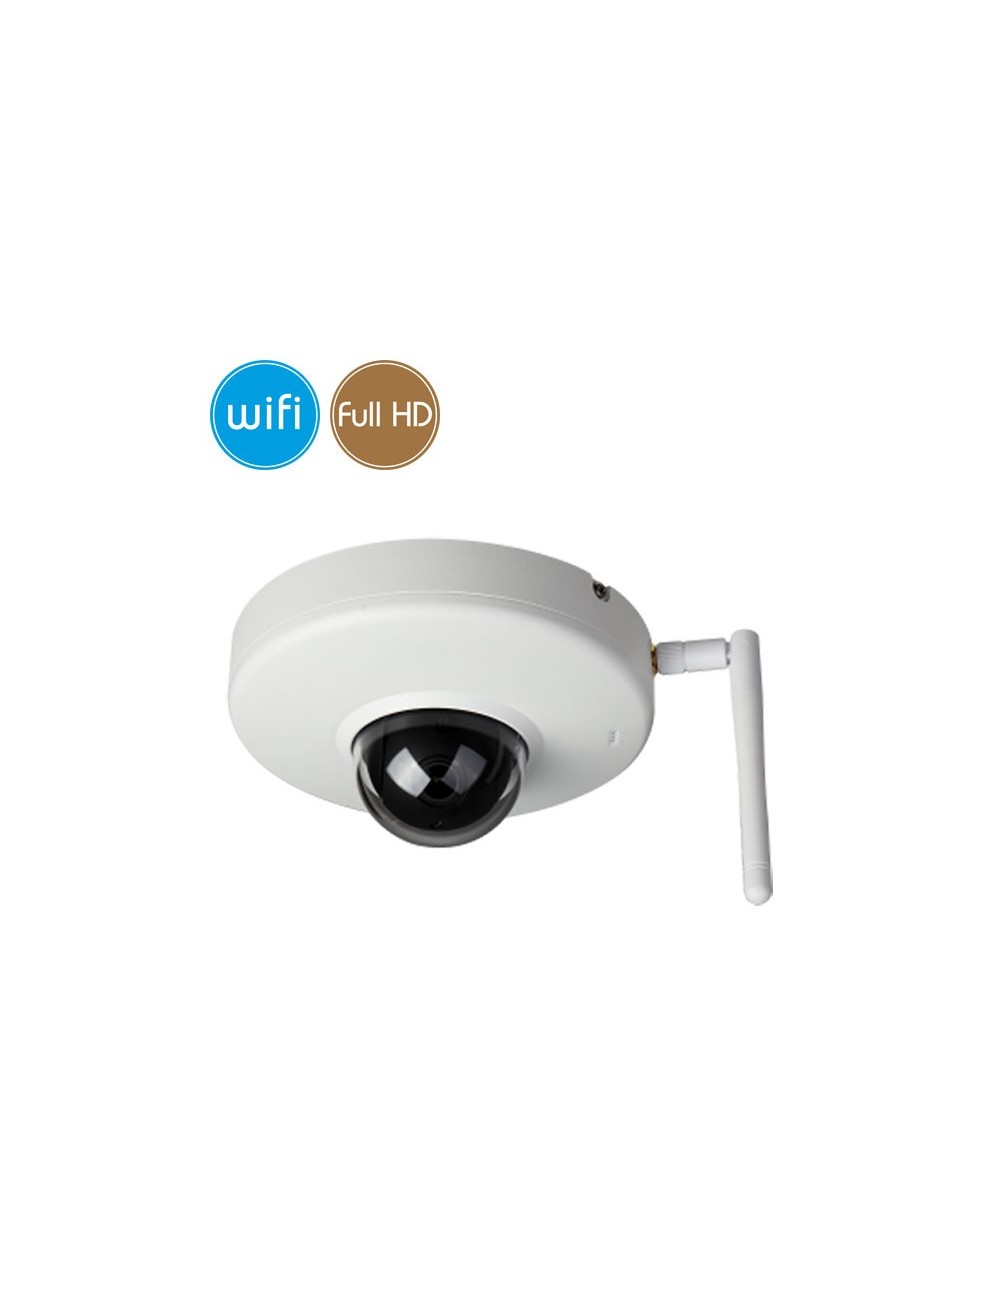 Dome camera wireless IP WiFi Pan Tilt - Full HD (1080p) - SONY Ultra Low Light - microSD